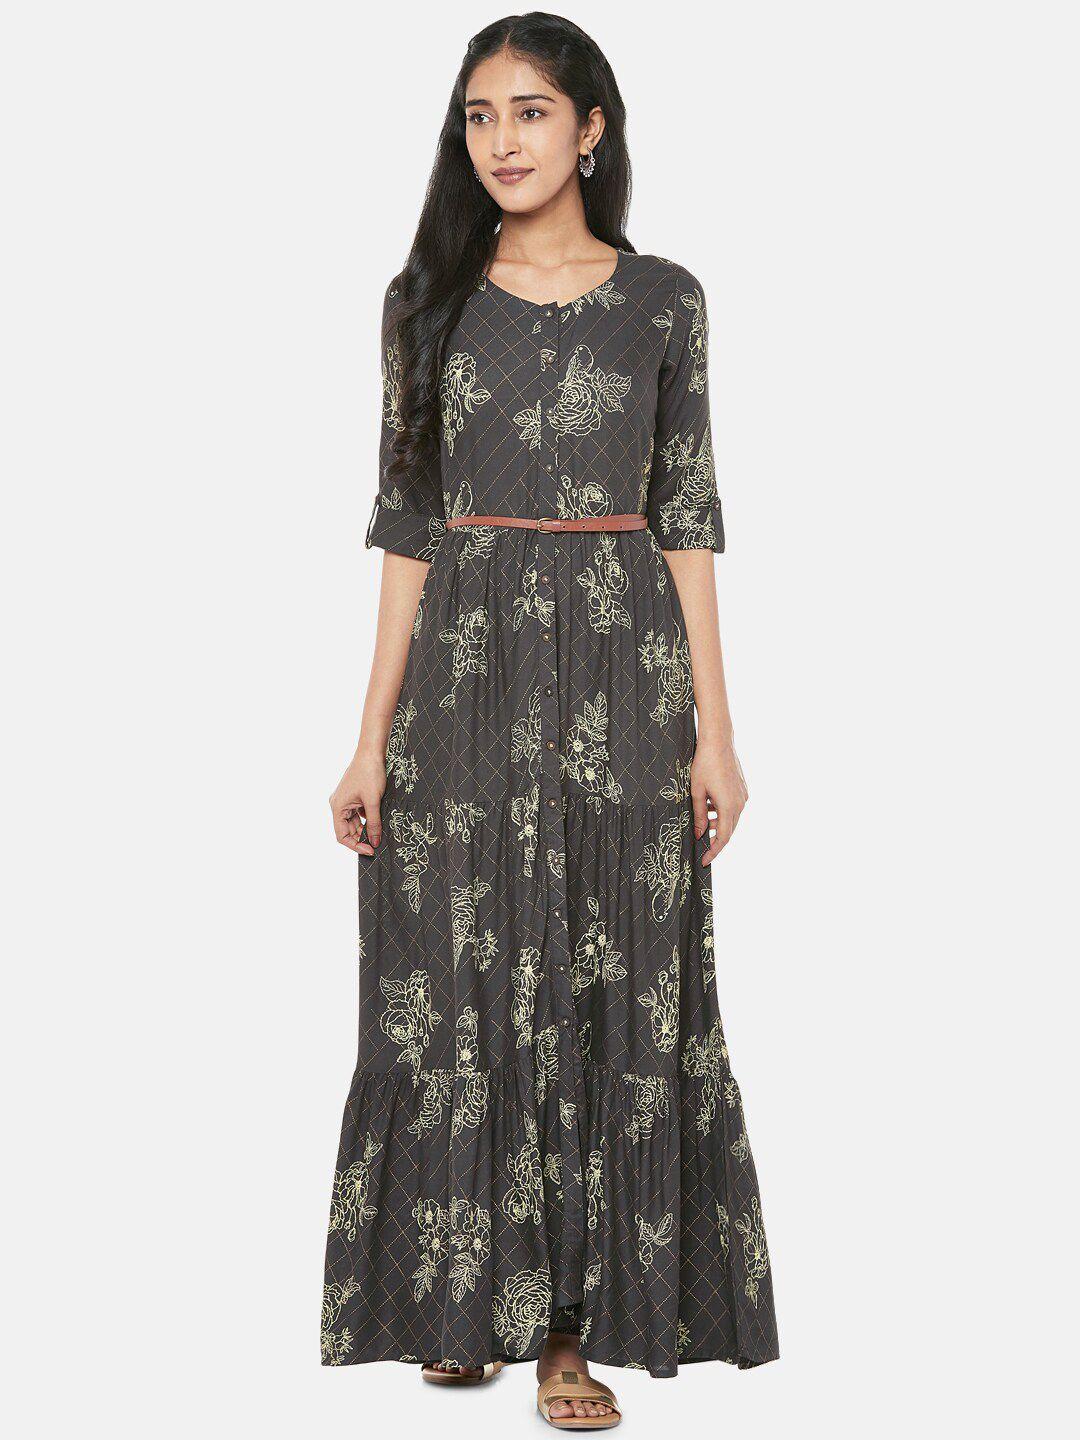 akkriti-by-pantaloons-women-charcoal-printed-maxi-dress